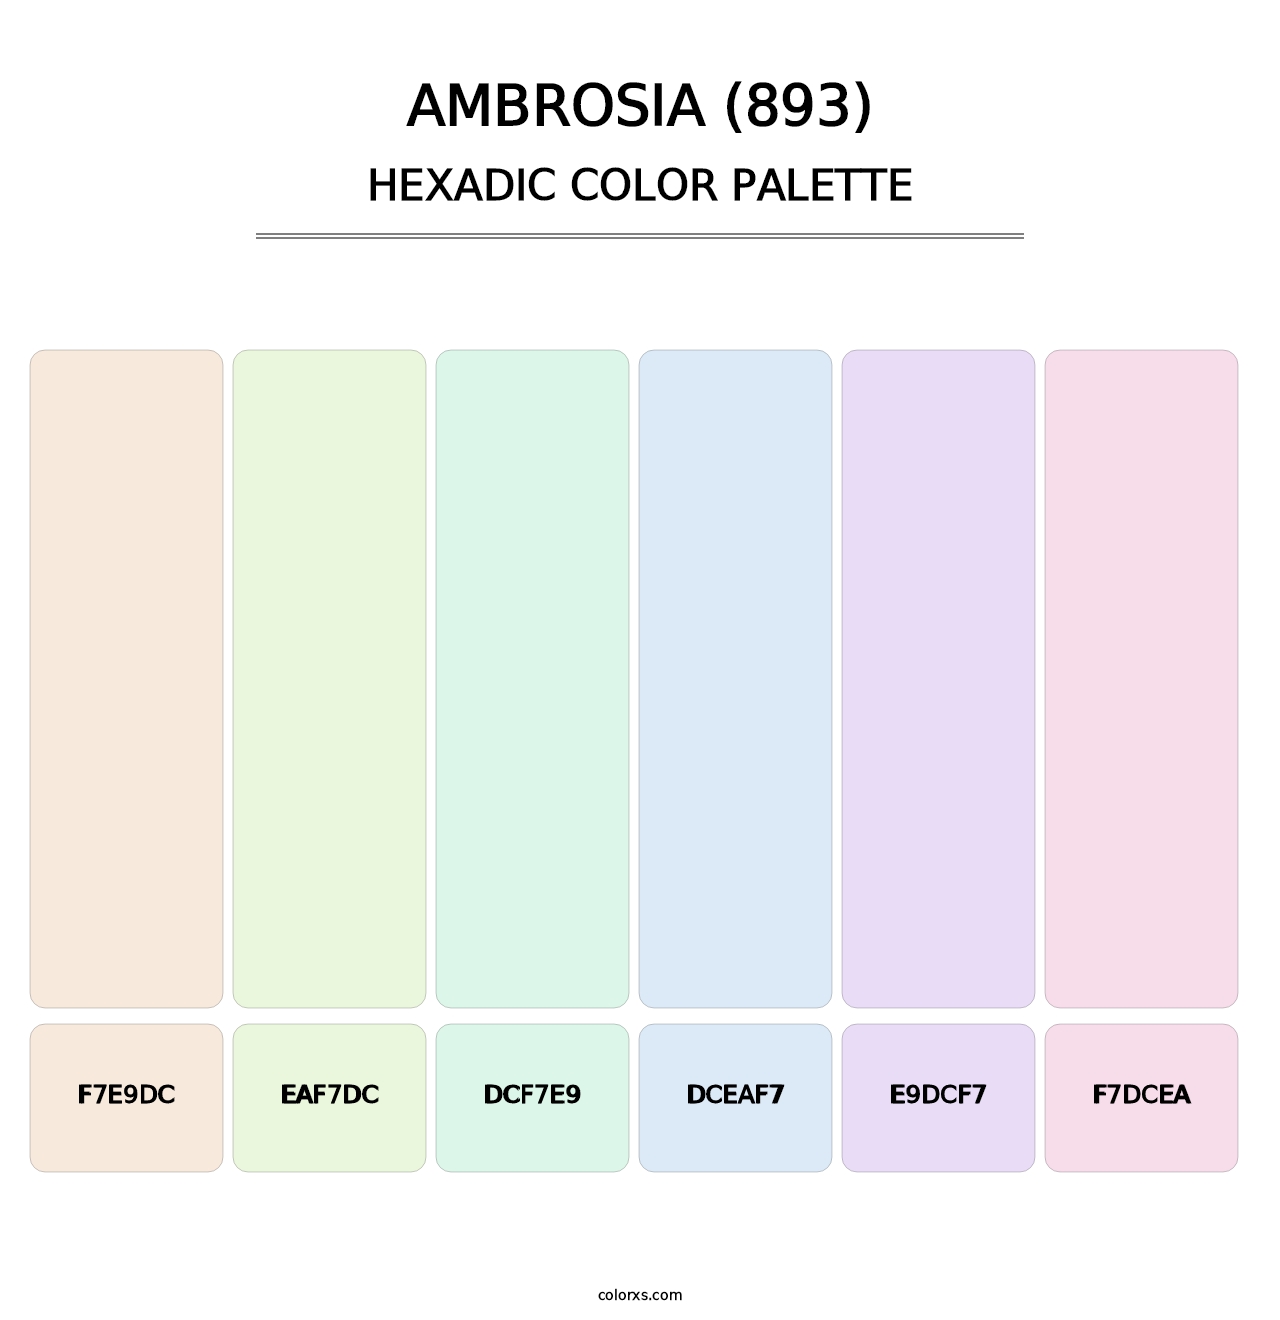 Ambrosia (893) - Hexadic Color Palette